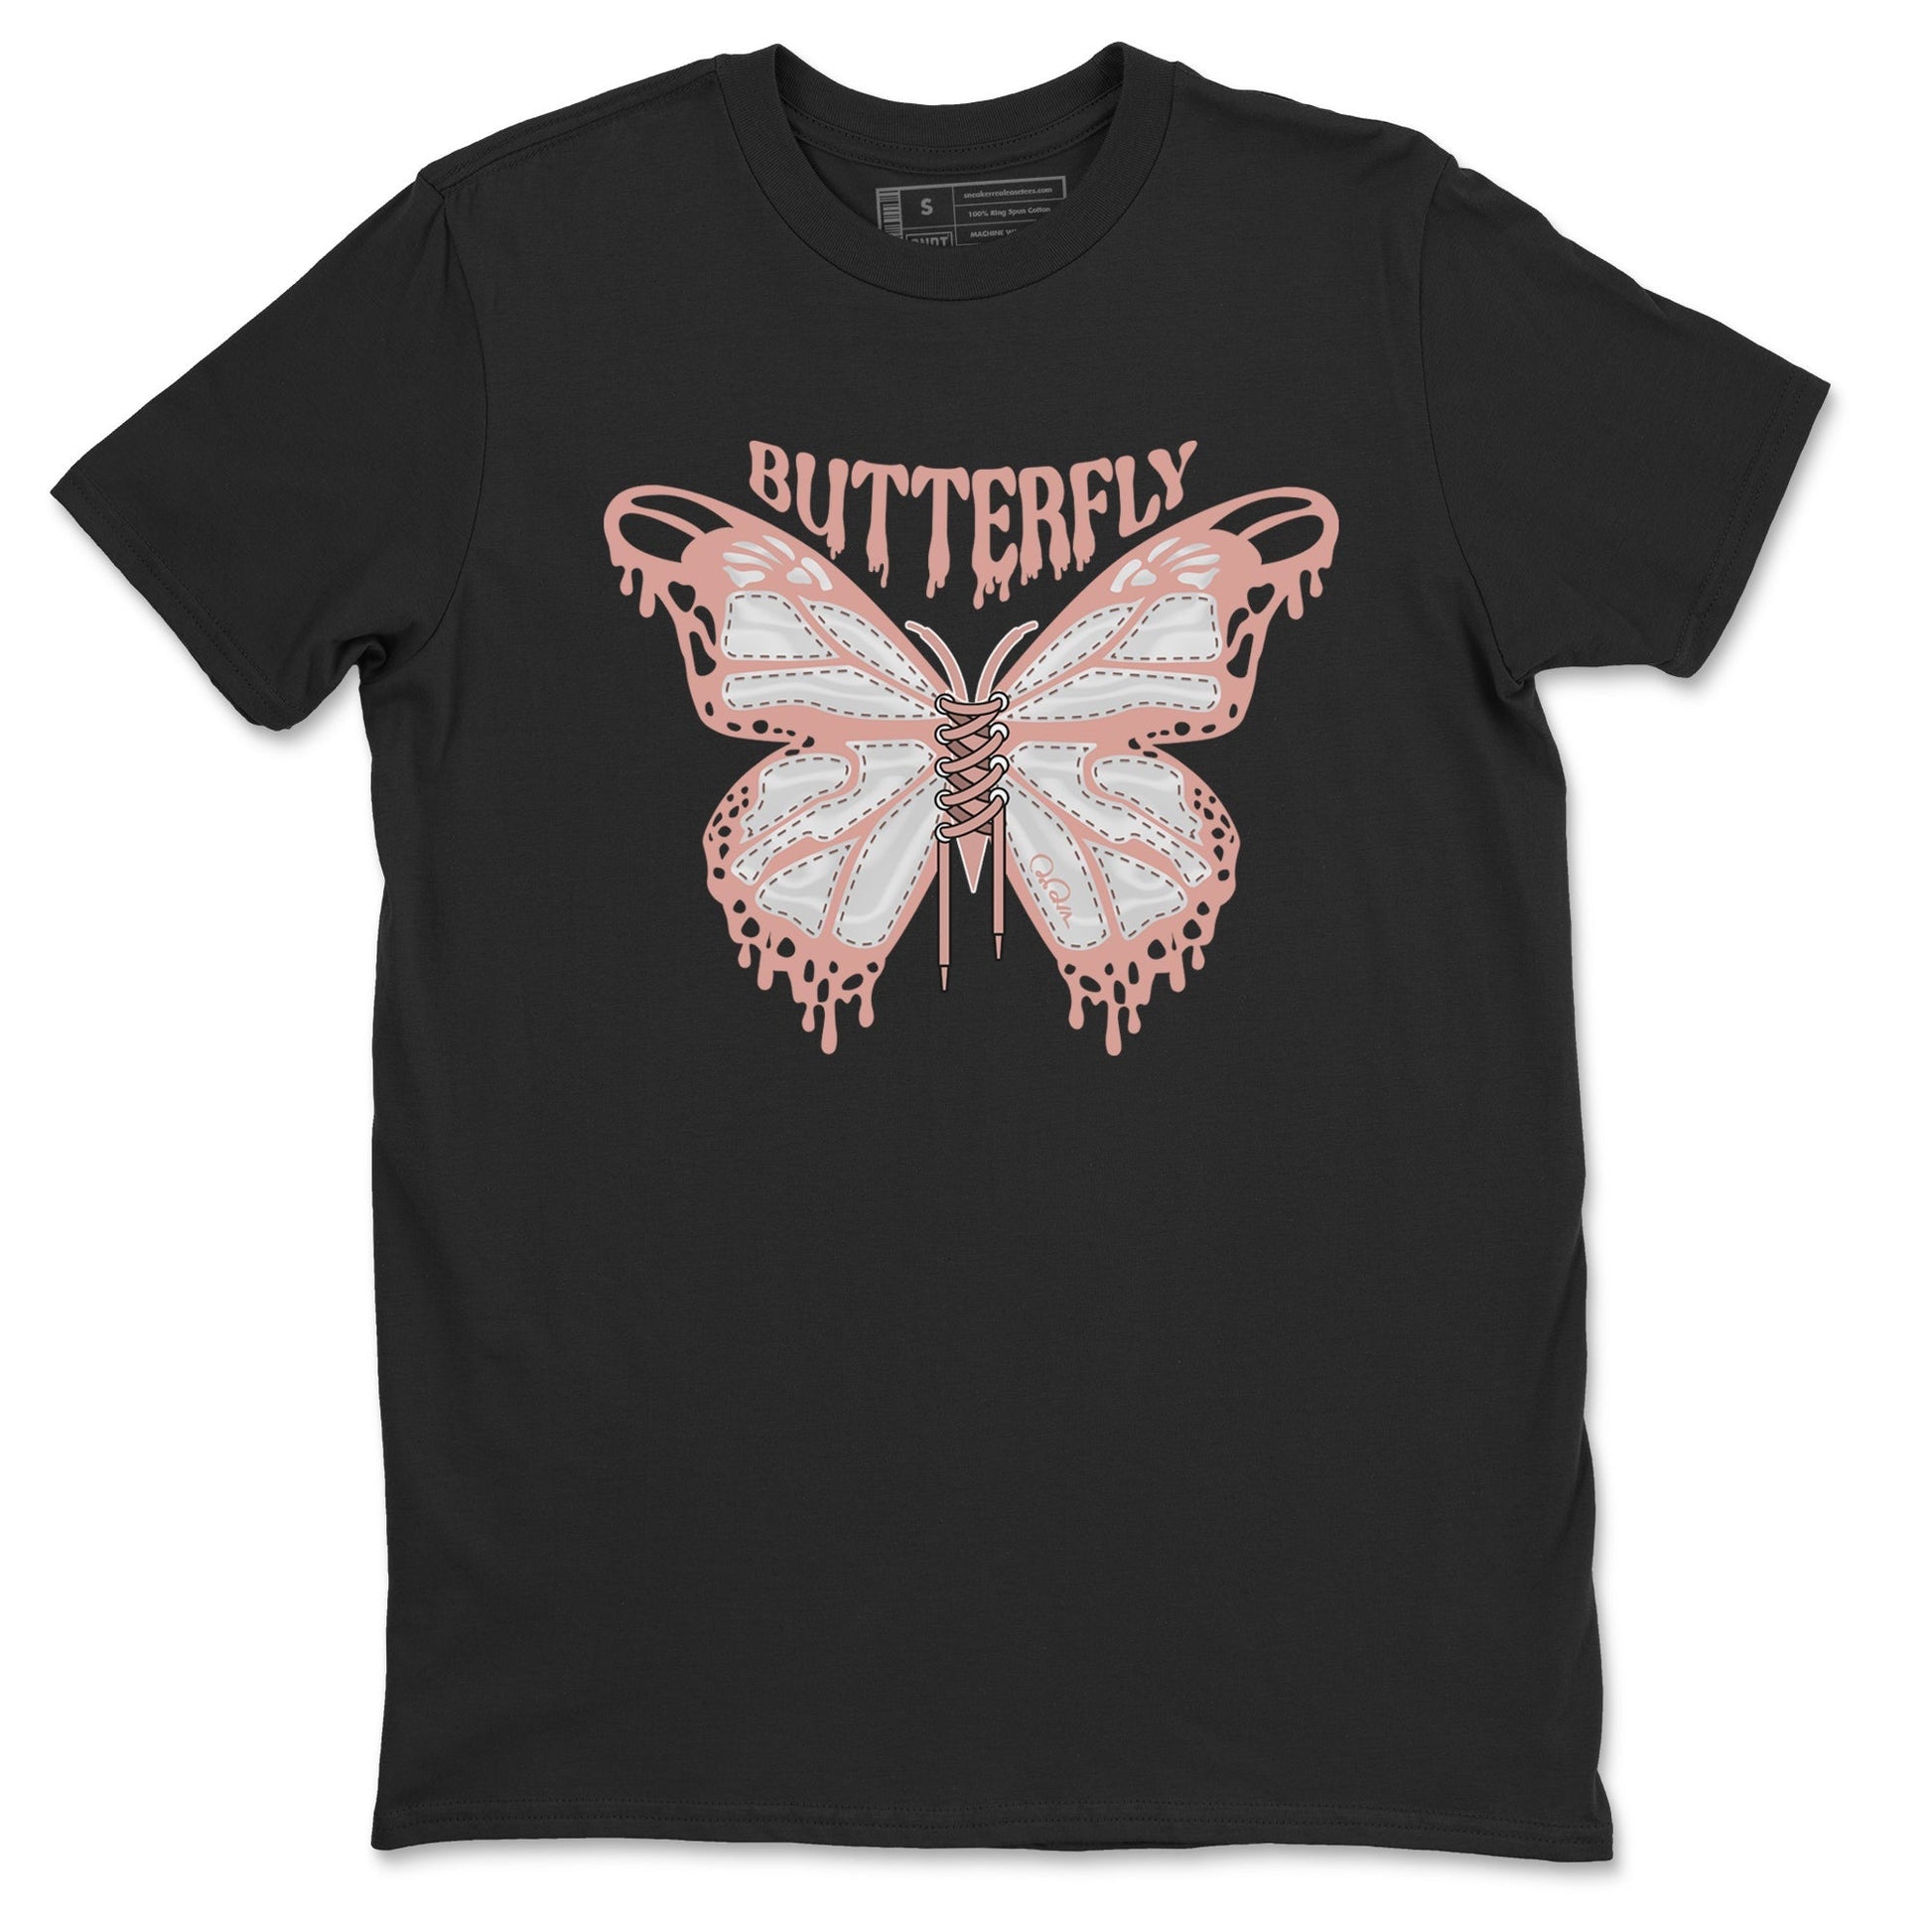 Dunk Rose Whisper shirt to match jordans Butterfly Streetwear Sneaker Shirt Nike Dunk LowRose Whisper Drip Gear Zone Sneaker Matching Clothing Unisex Black 2 T-Shirt